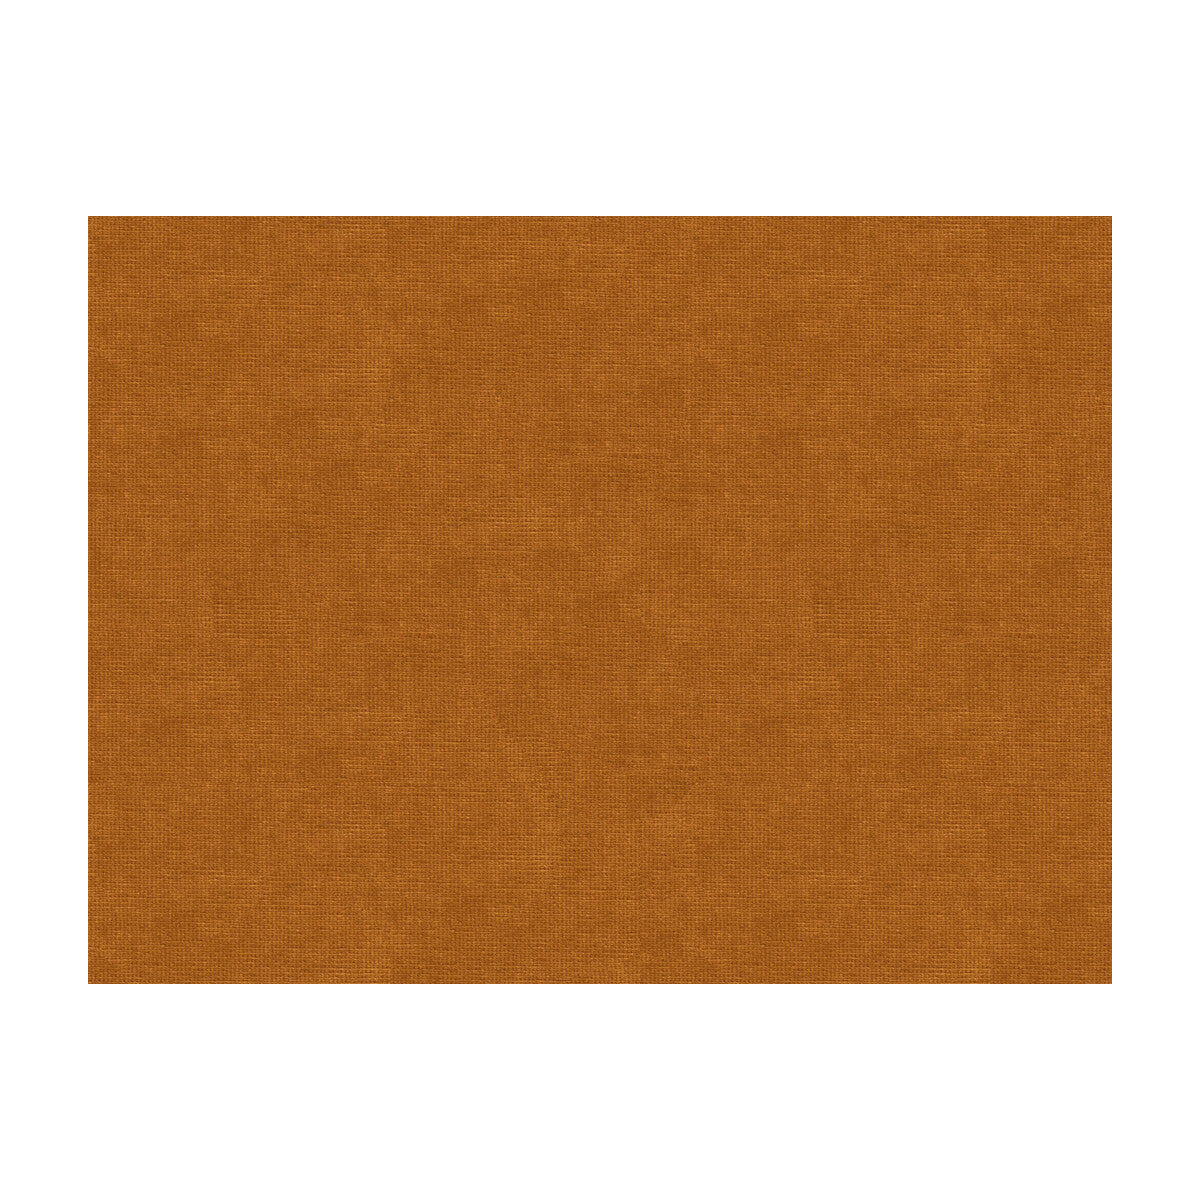 Charmant Velvet fabric in caramel color - pattern 8013150.12.0 - by Brunschwig &amp; Fils